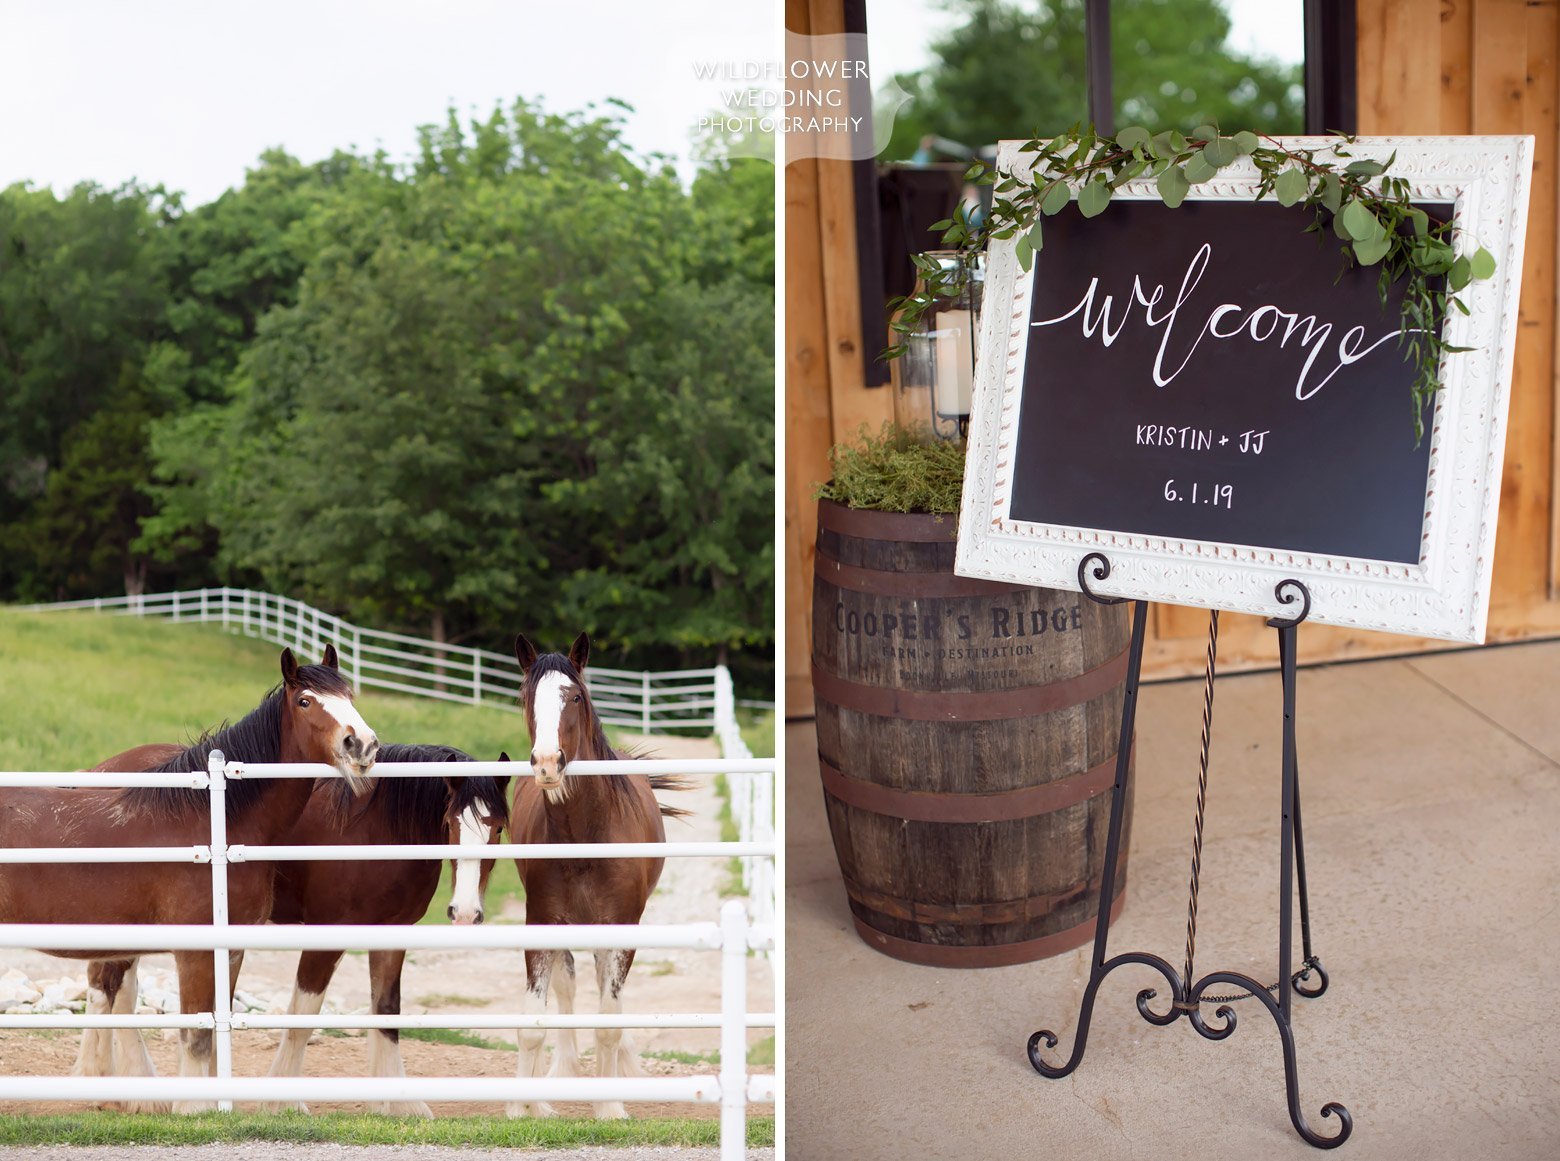 Cooper's Ridge wedding venue with horses in mid-MO.